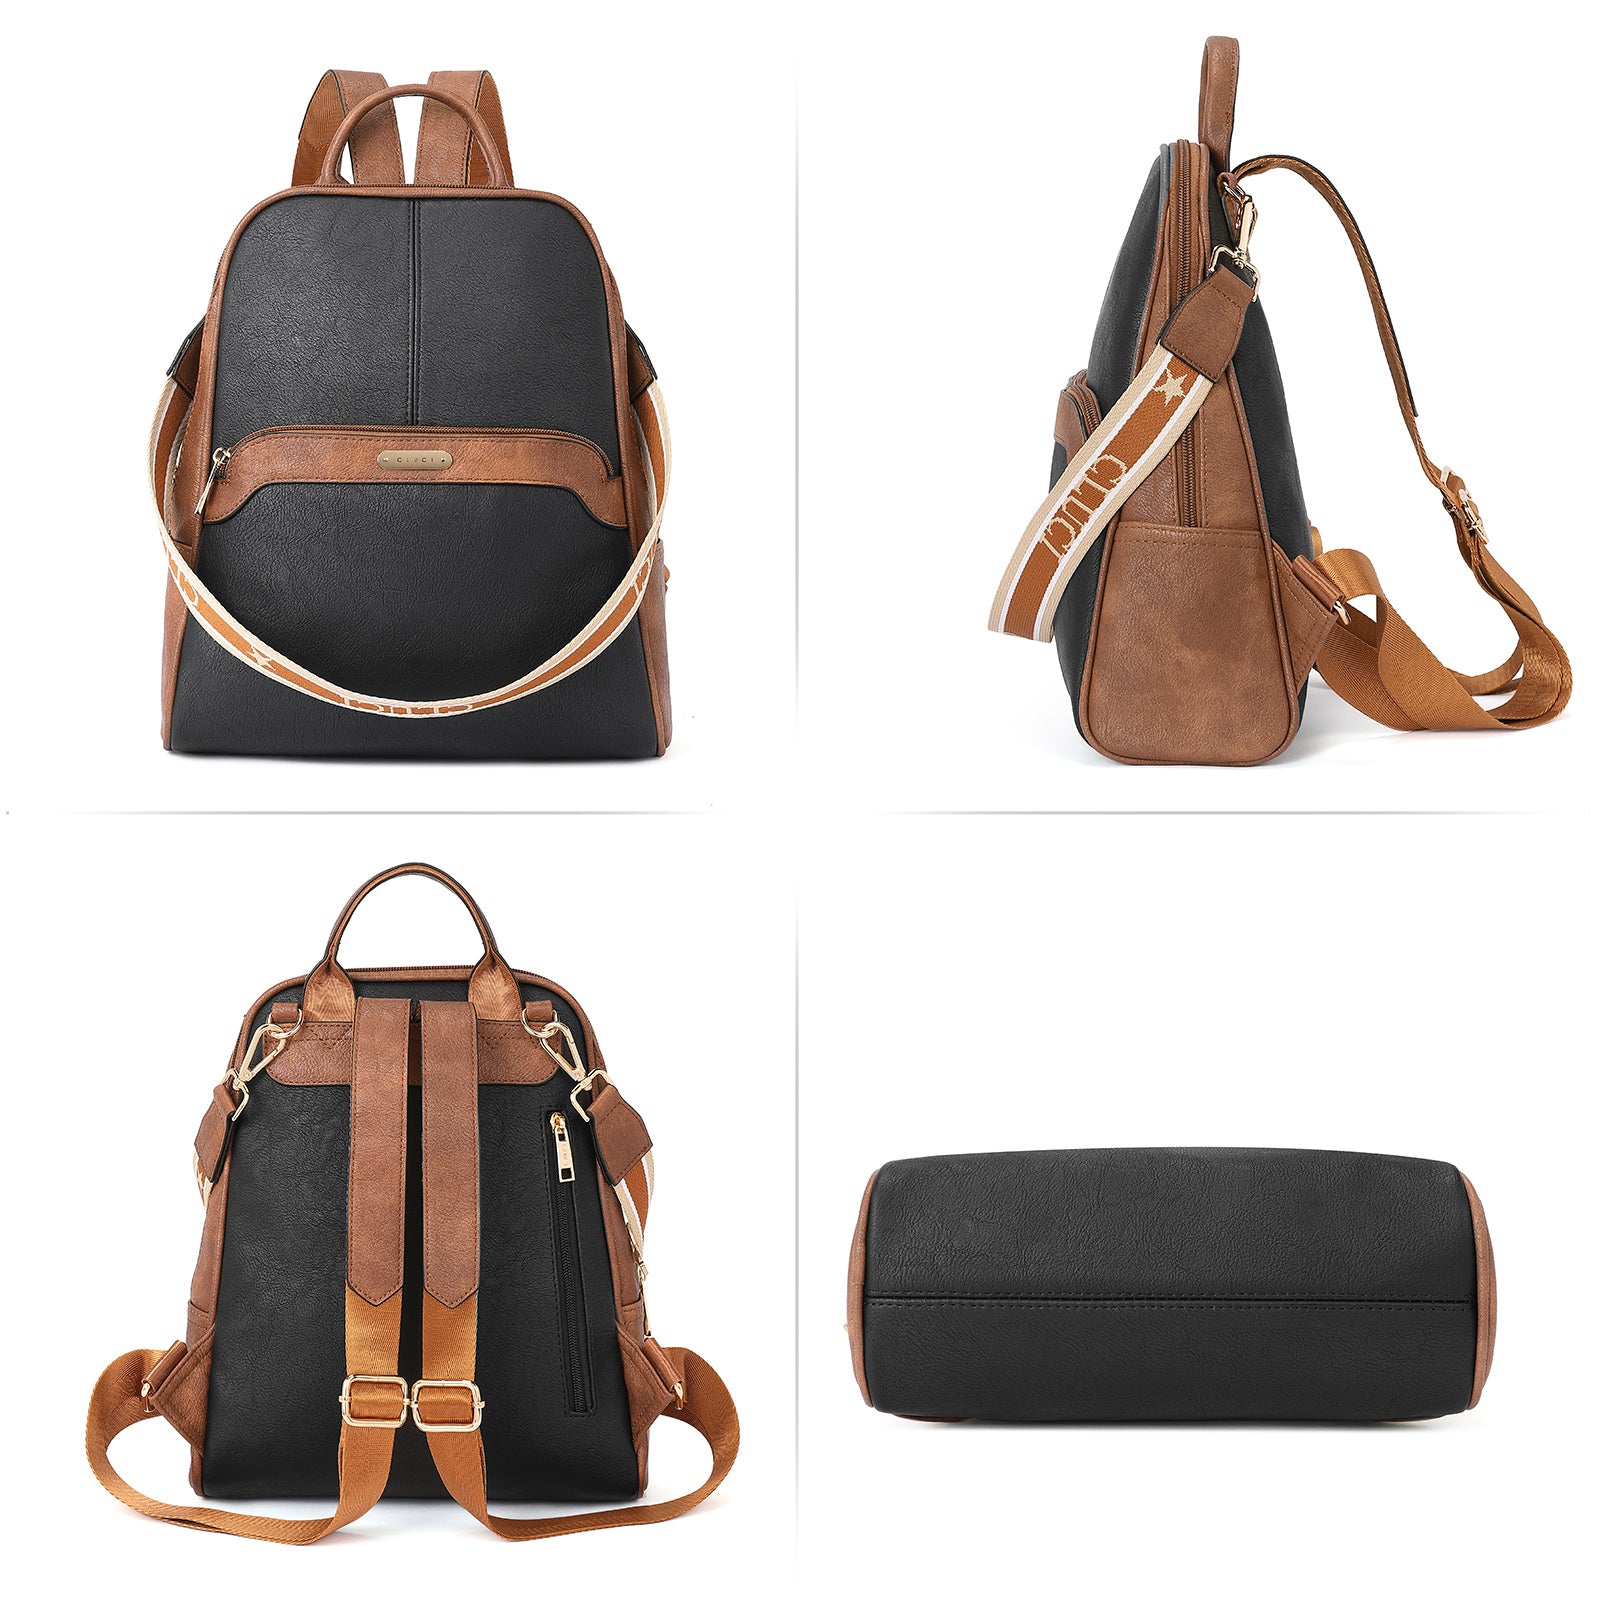 Brown Leather and Canvas Compact Travel Bag - Rothco 8